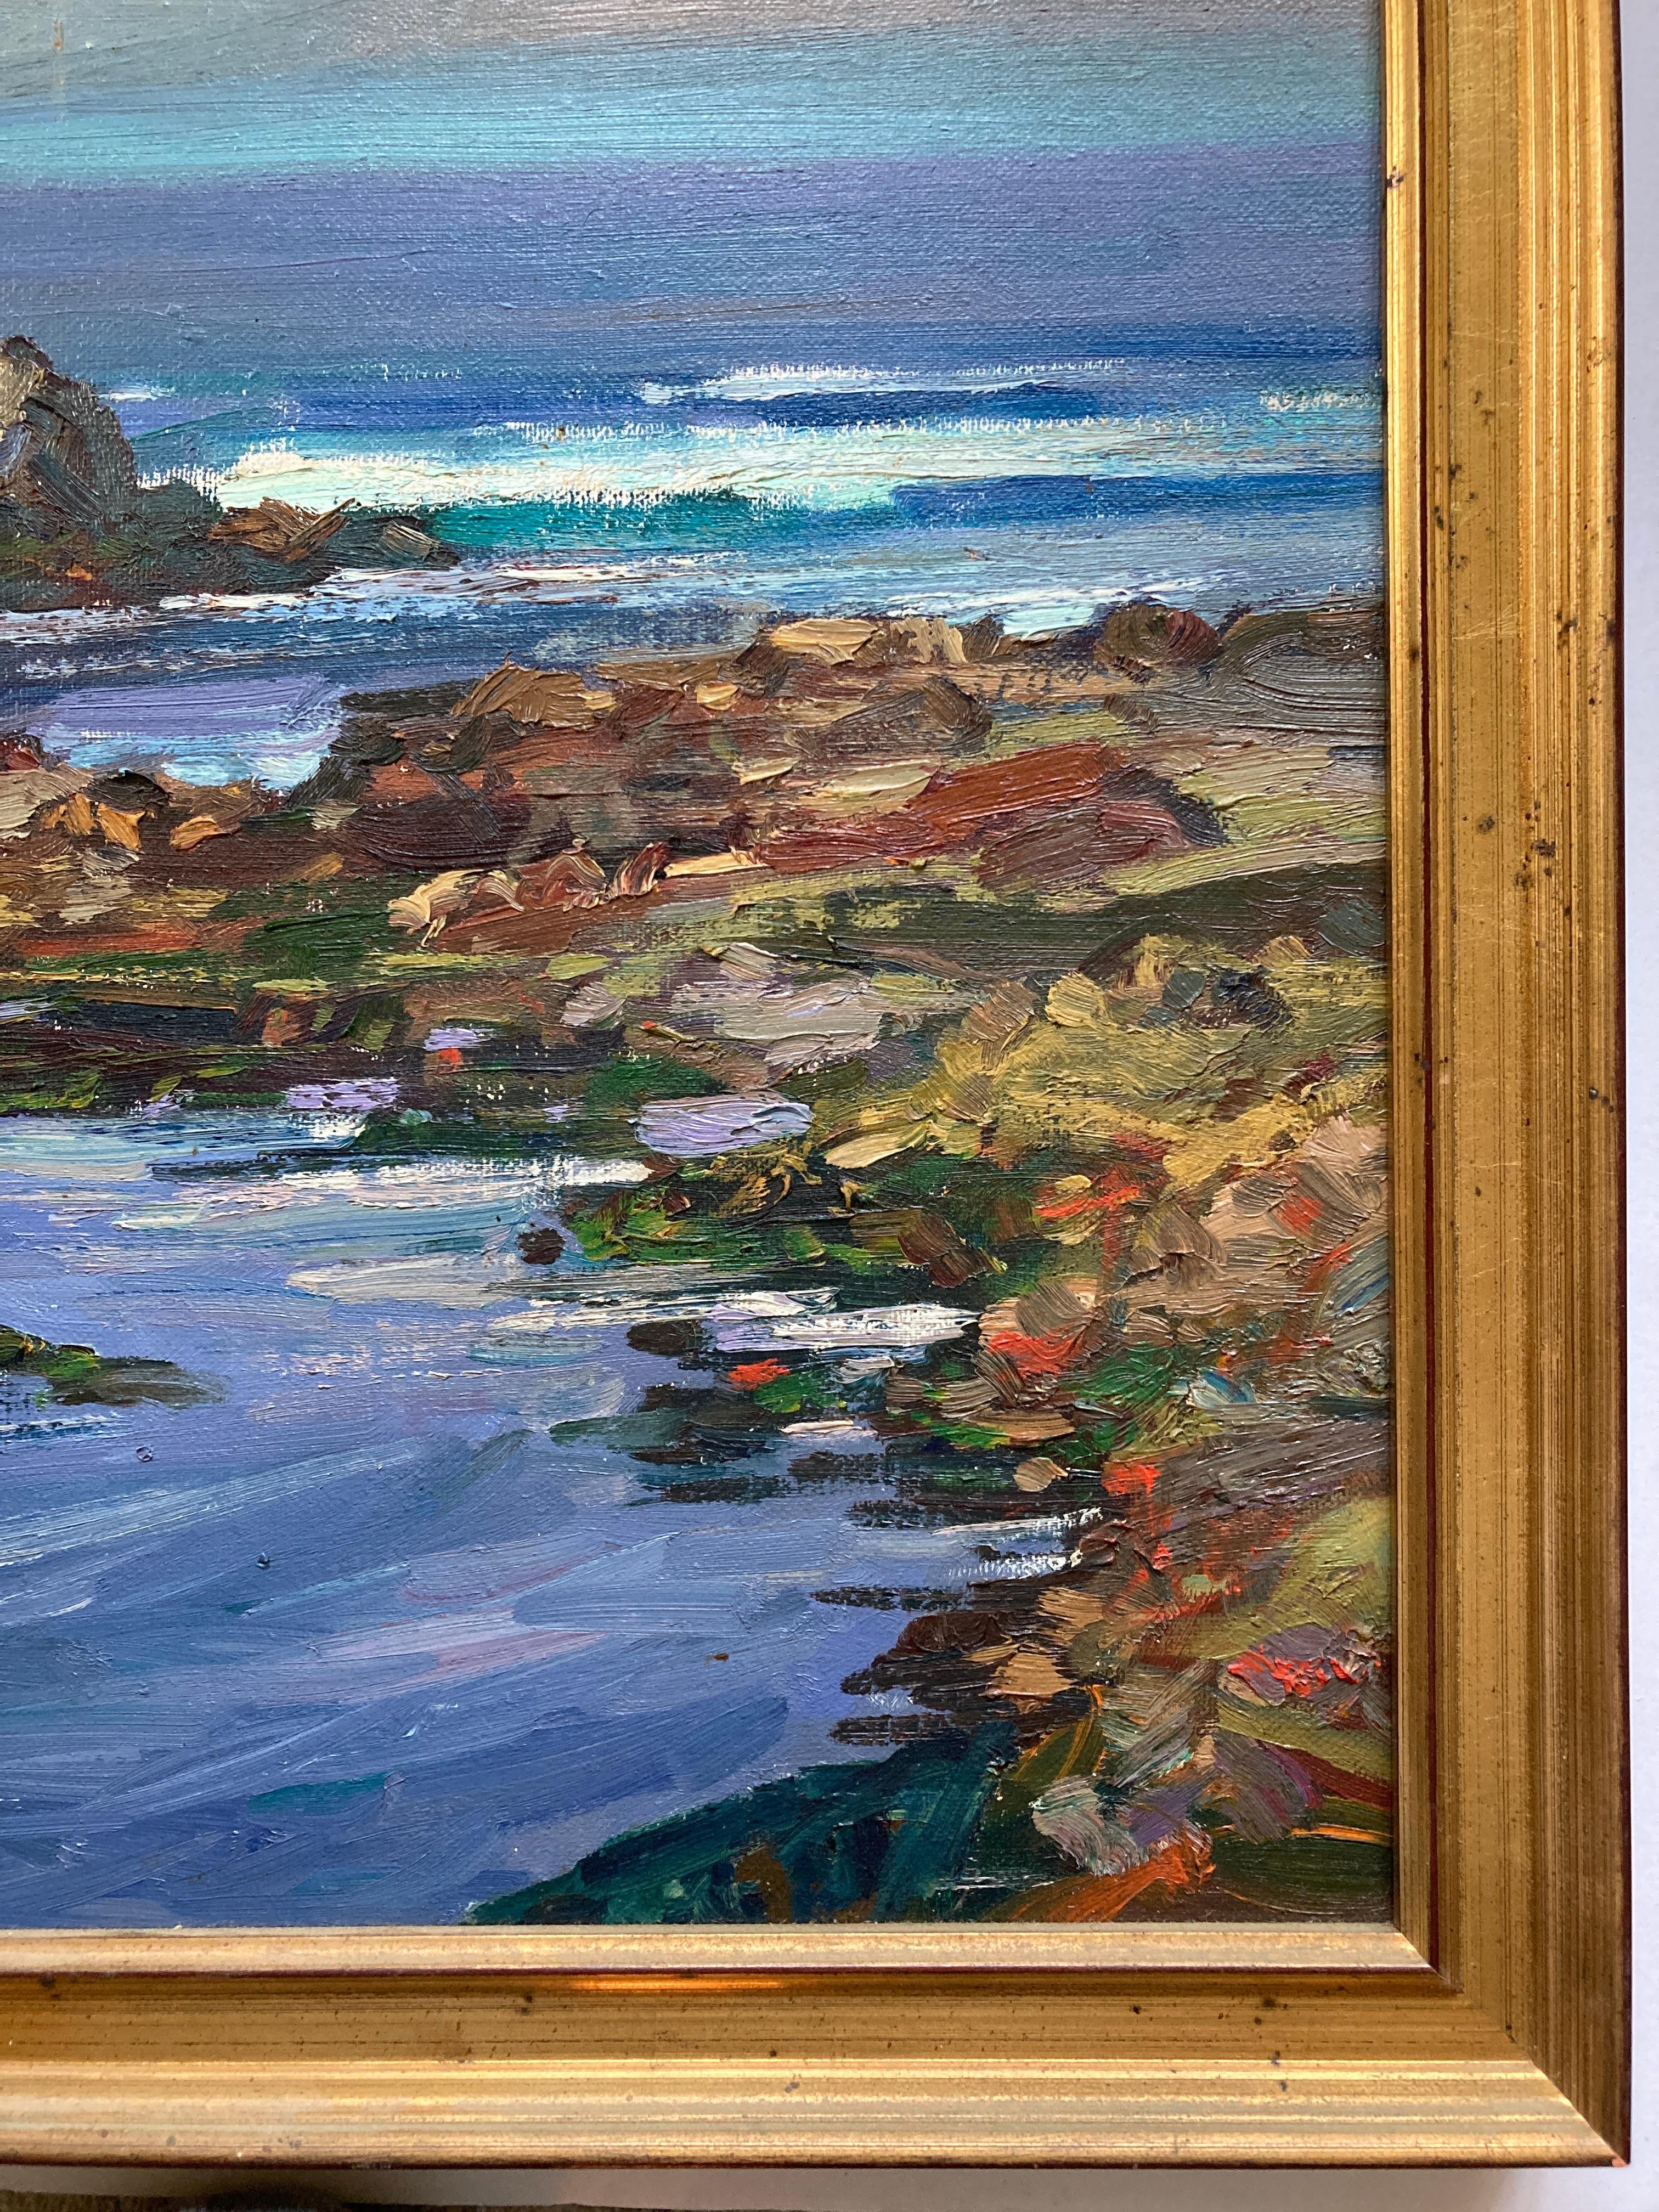 Edward Glafke 'Bird Rock' Pebble Beach Impressionist Seascape Painting For Sale 3